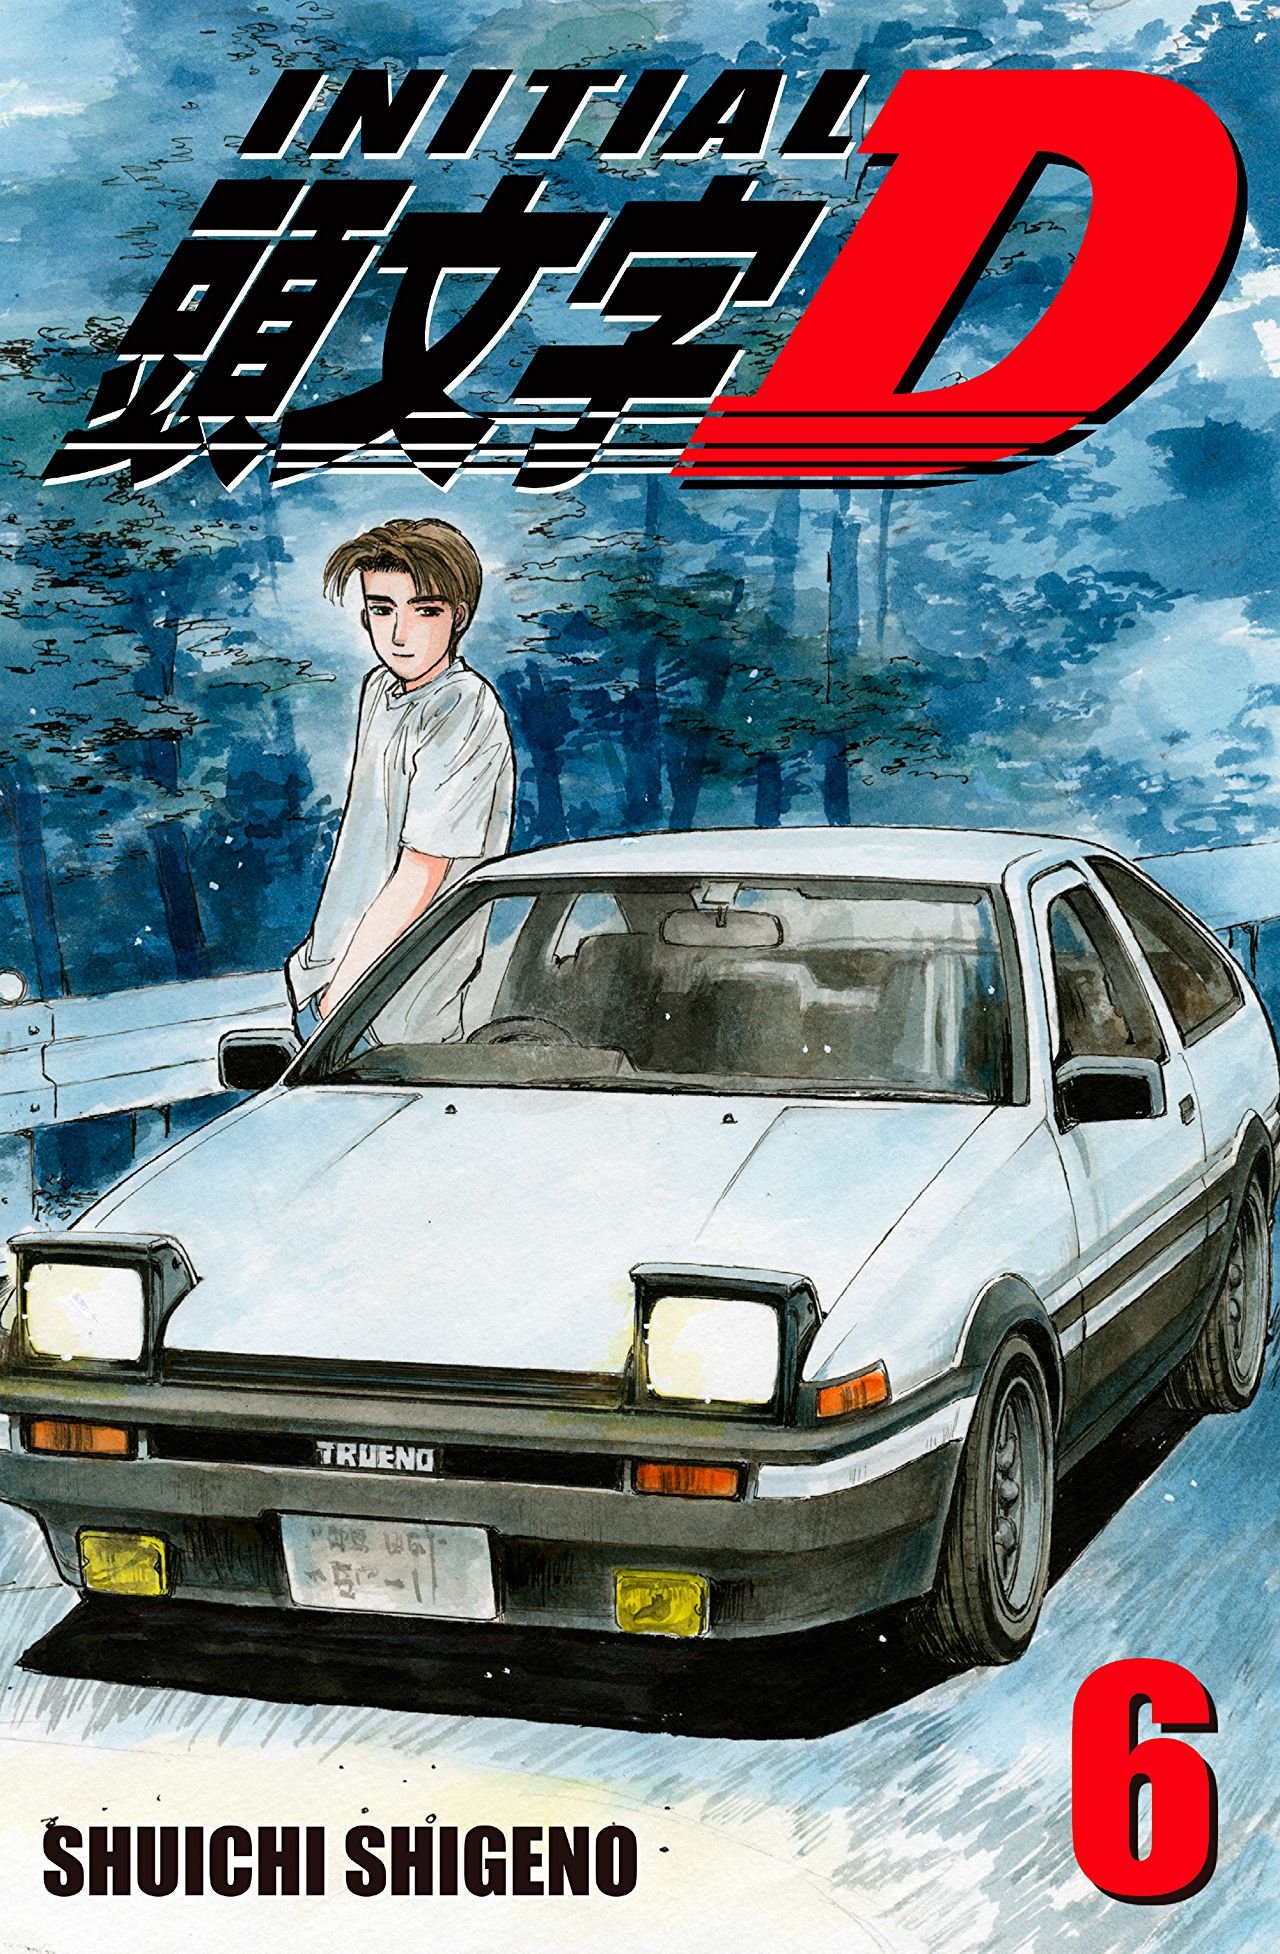 Tokyo drift anime HD wallpapers  Pxfuel